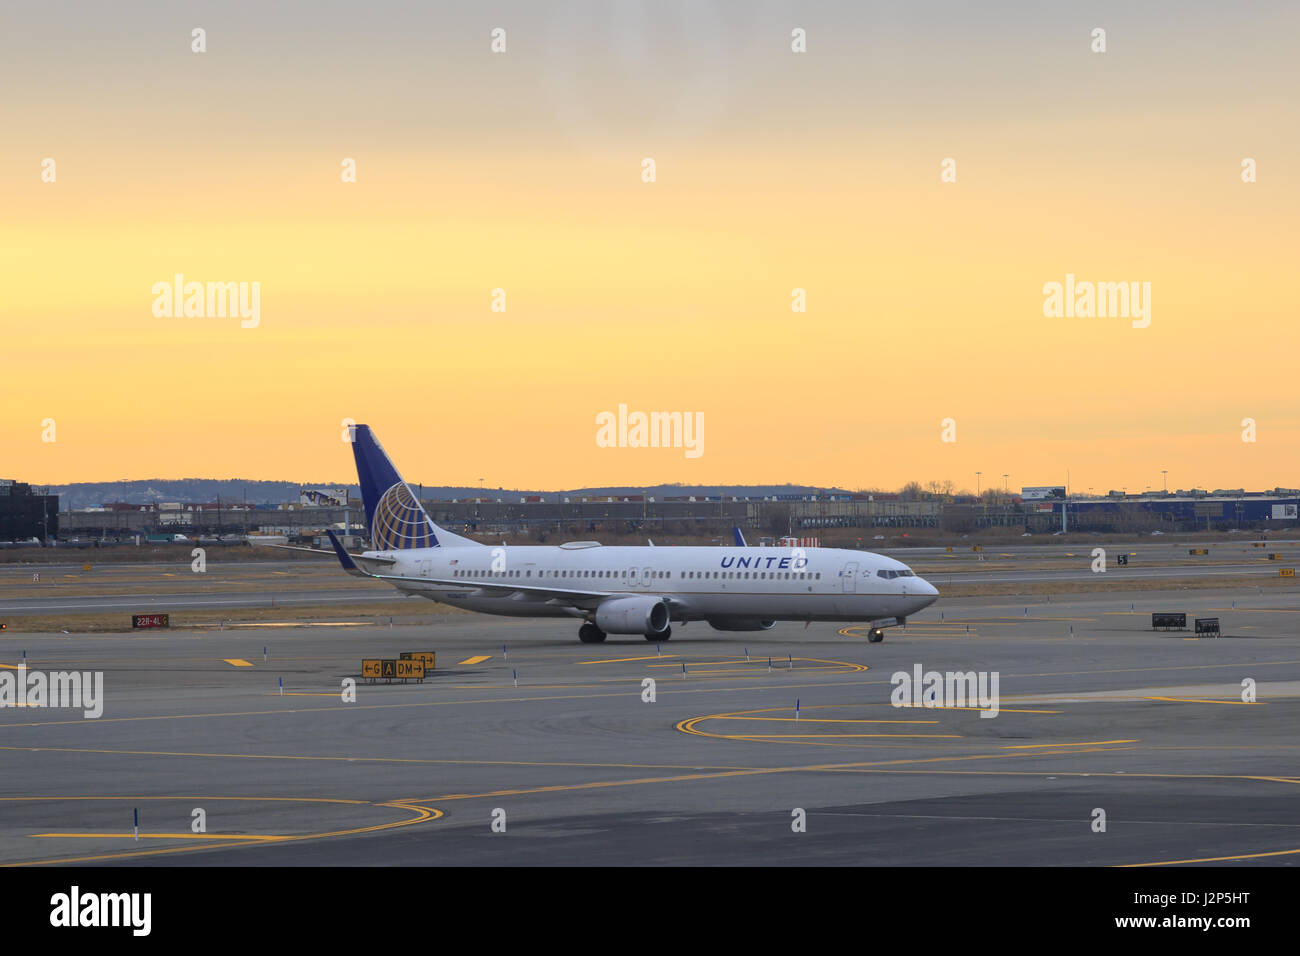 Newark Airport, Newark, NJ - 31. Dezember 2016: United Airlines Flugzeug auf dem Flughafen Newark. Stockfoto